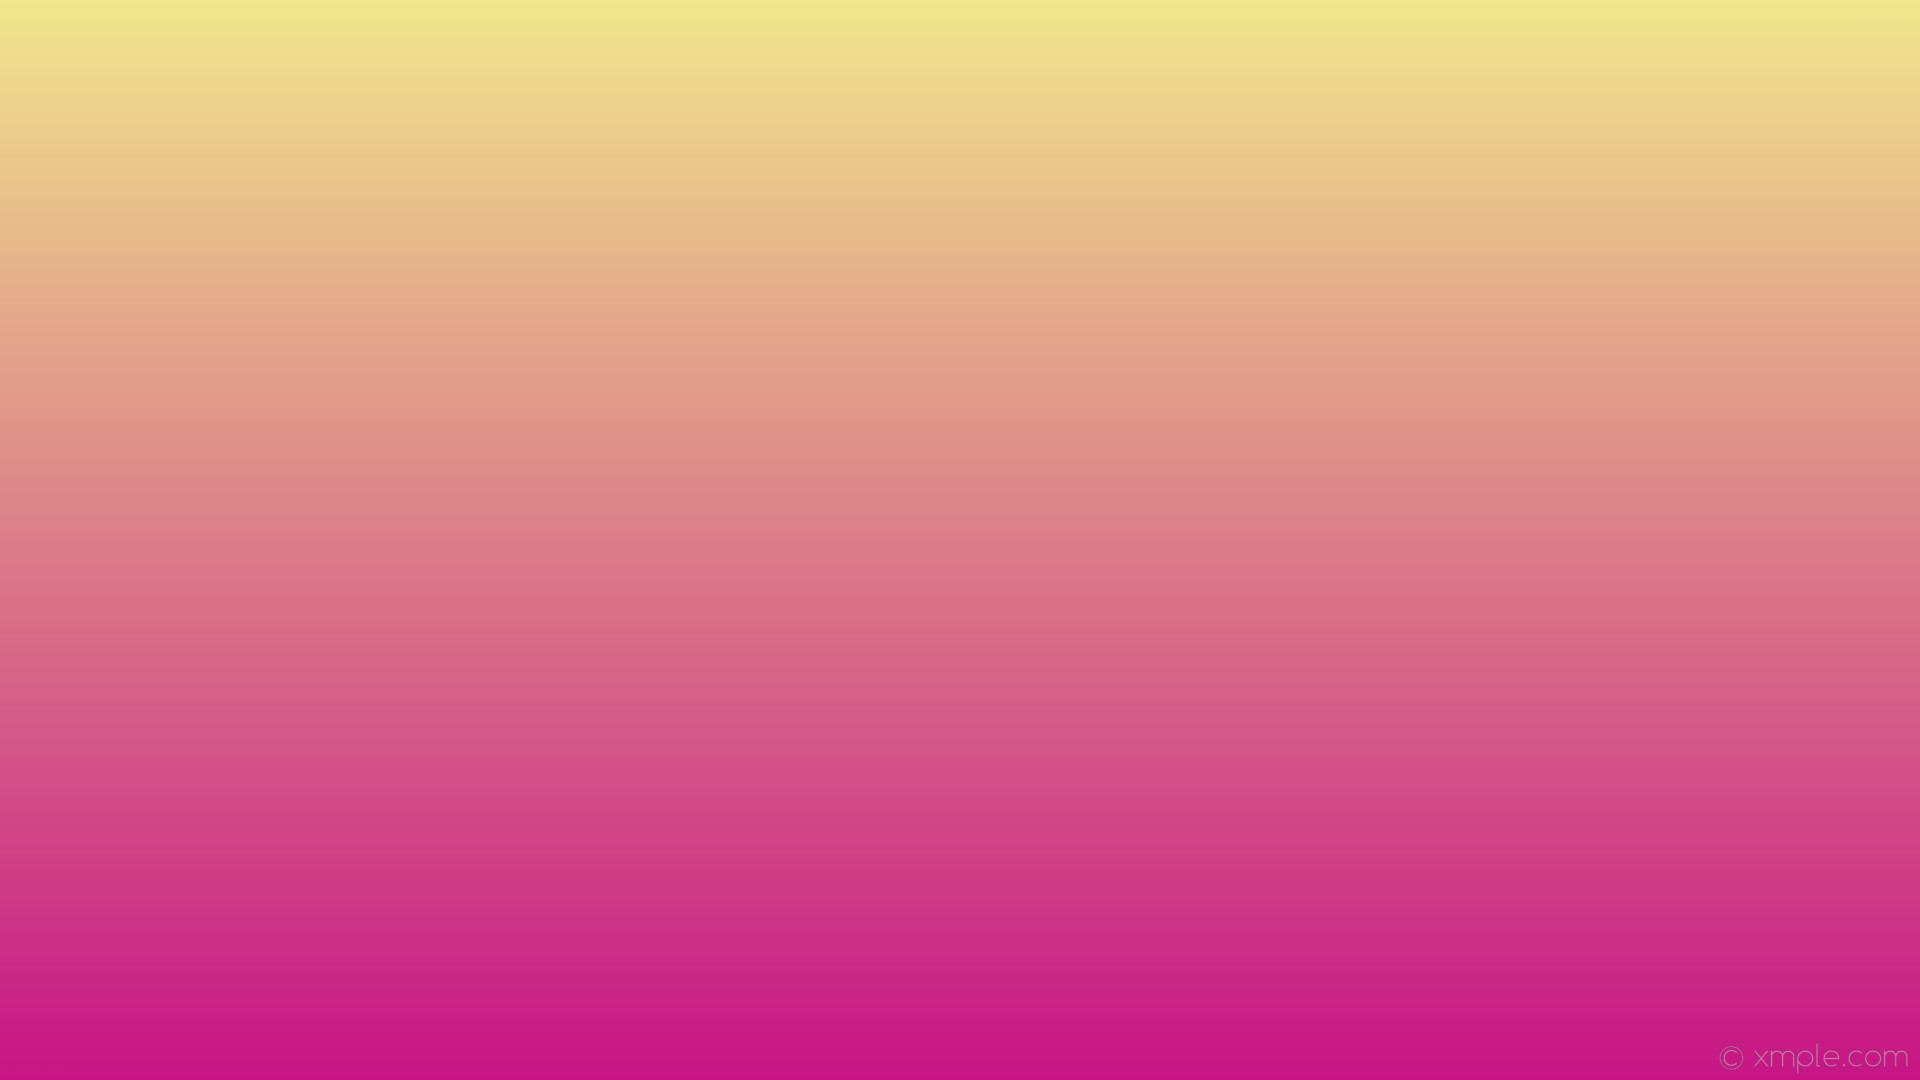 1920x1080 wallpaper linear yellow pink gradient khaki medium violet red #f0e68c  #c71585 90Â°